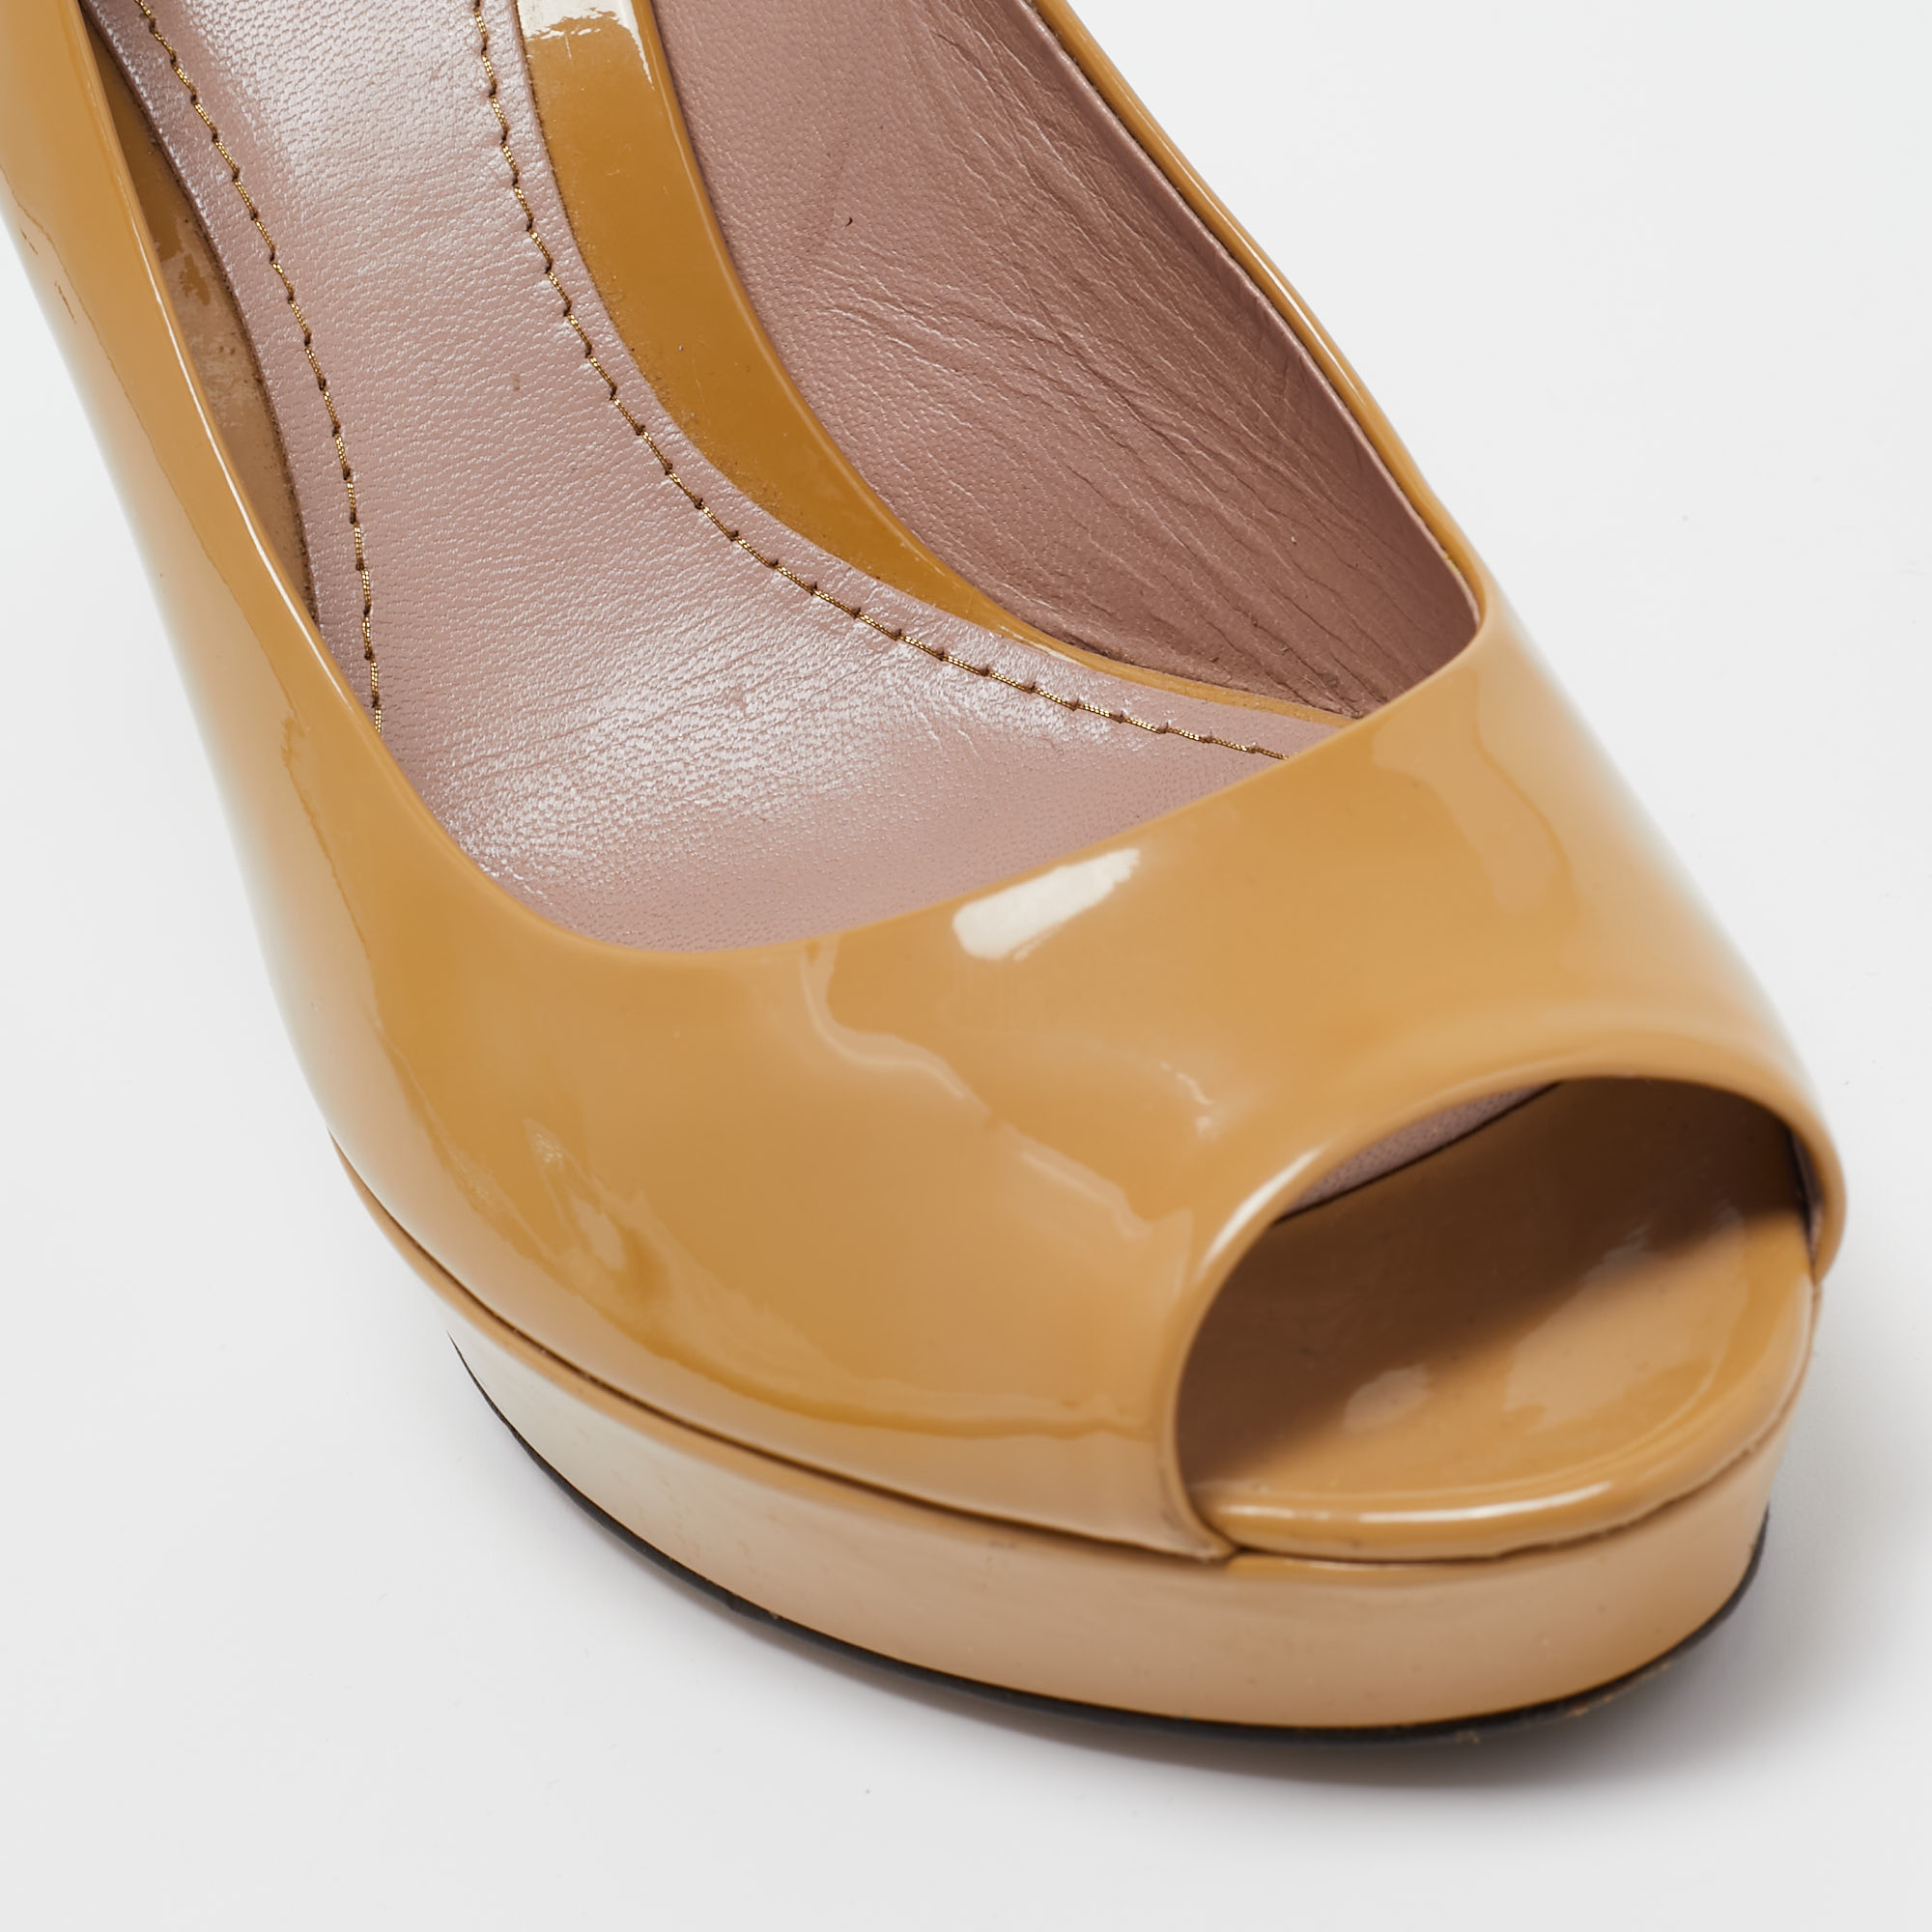 Gucci Brown Patent Leather Peep Toe Platform Pumps Size 39